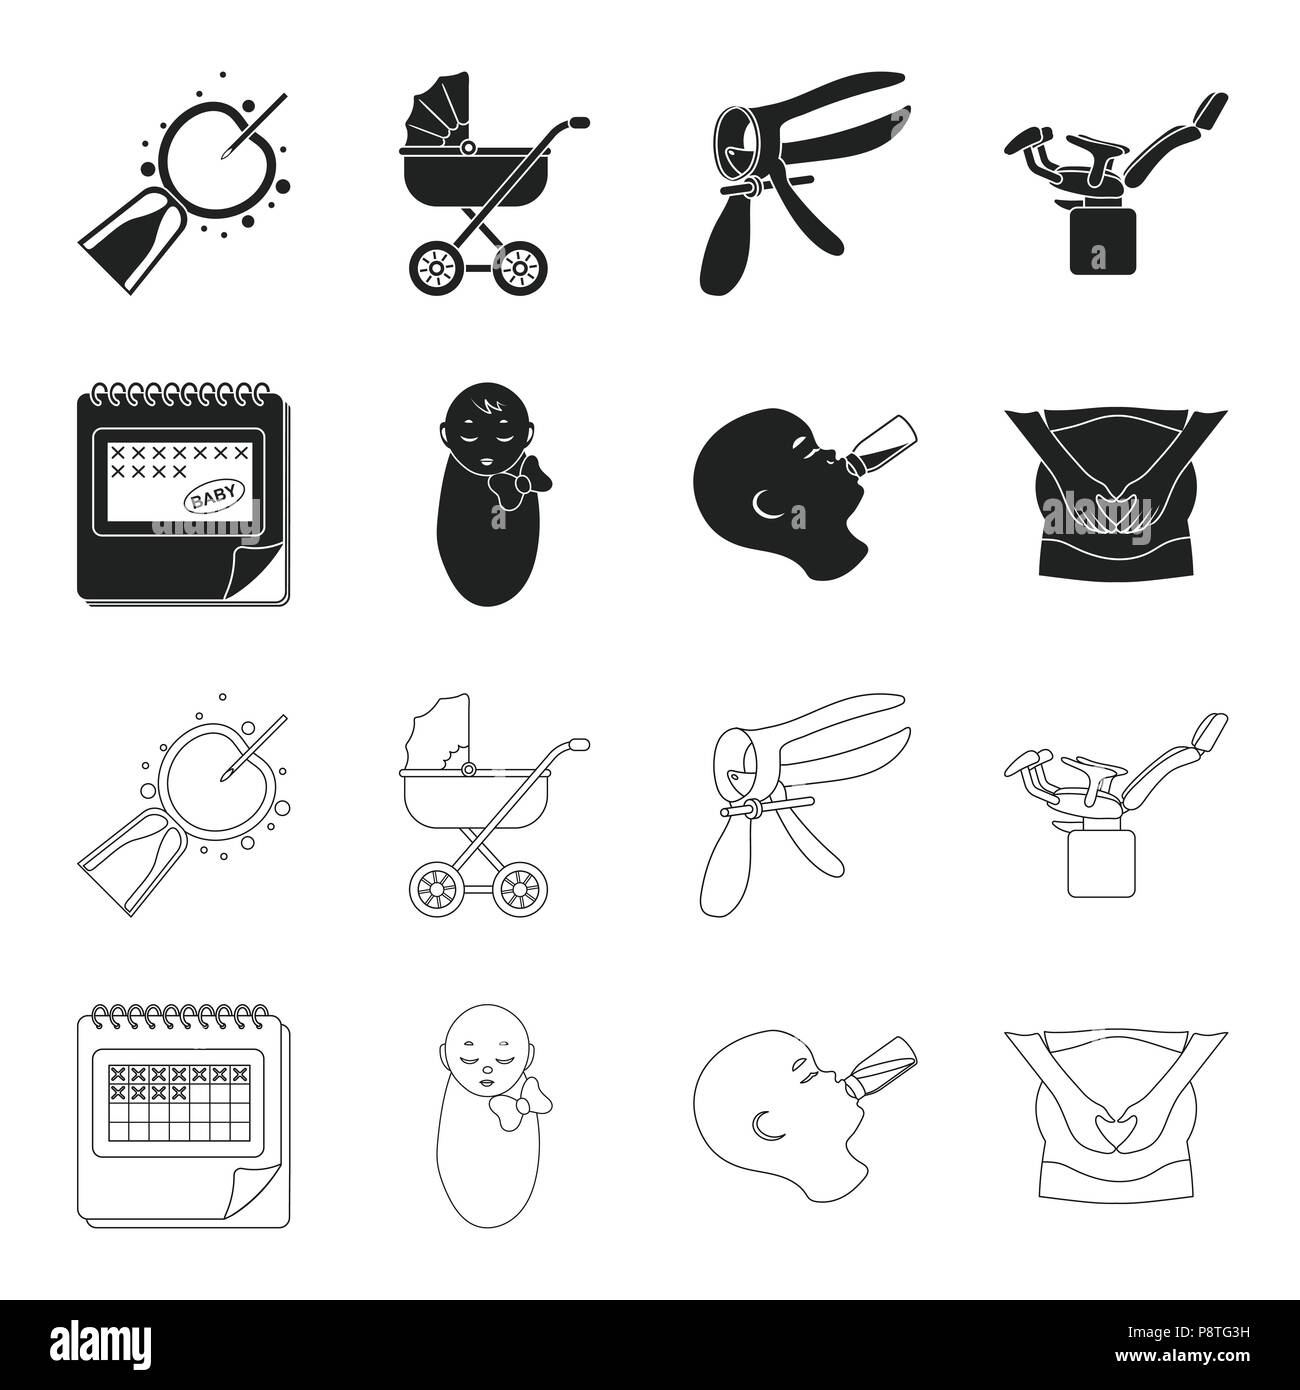 https://c8.alamy.com/comp/P8TG3H/calendar-newborn-stomach-massage-artificial-feeding-pregnancy-set-collection-icons-in-blackoutline-style-vector-symbol-stock-illustration-P8TG3H.jpg